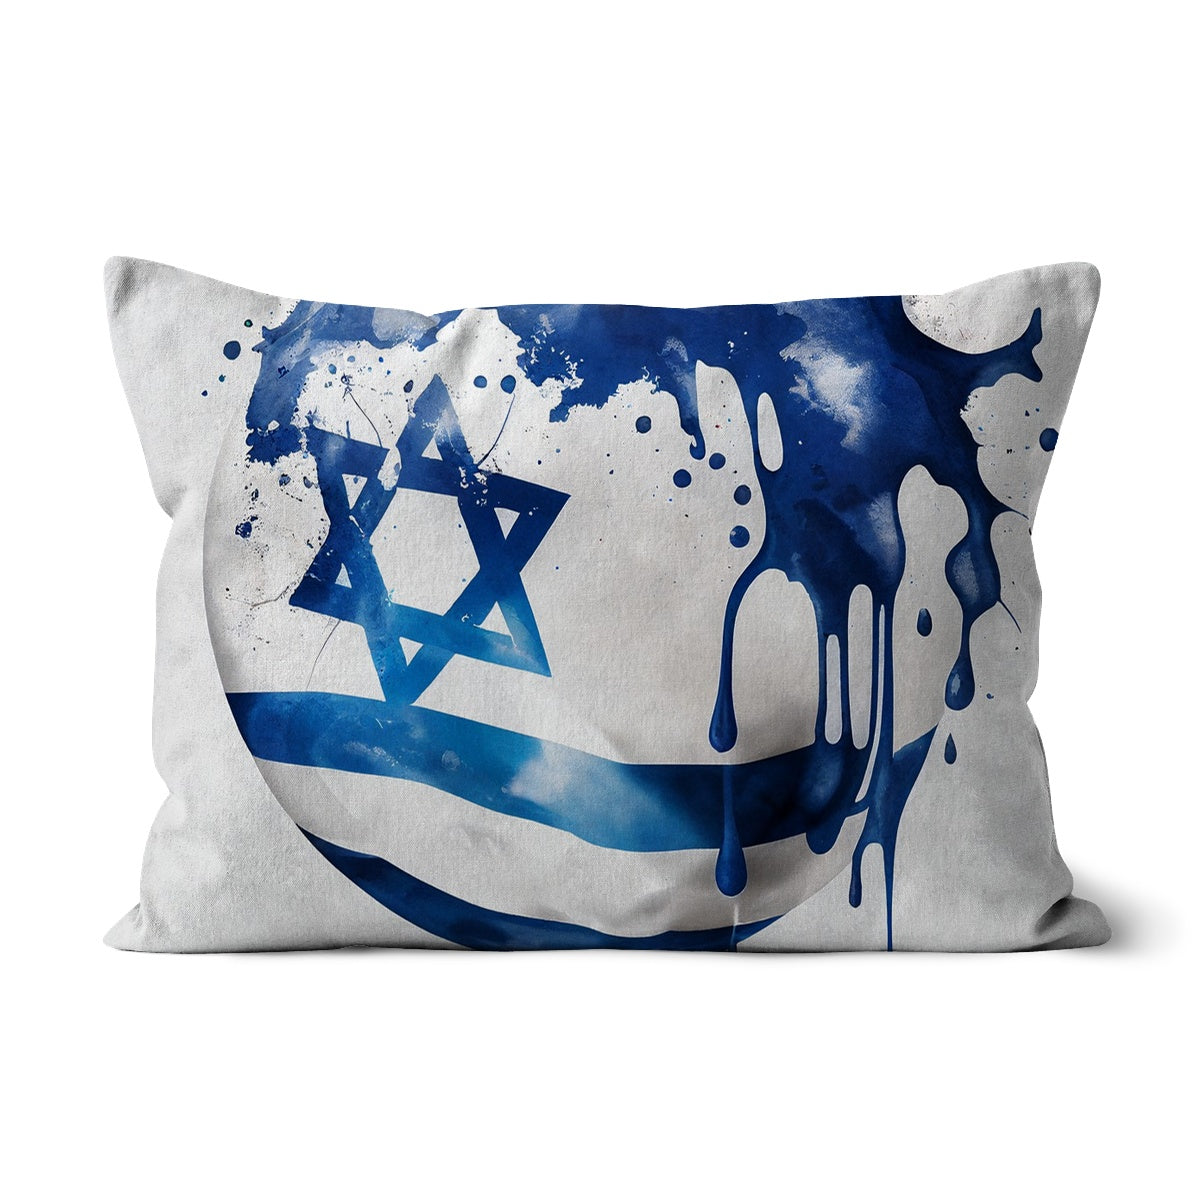 Israeli Spirit Embrace // Vibrant Flag Art Cushion – A Cozy Hug of National Pride and Modern Design!